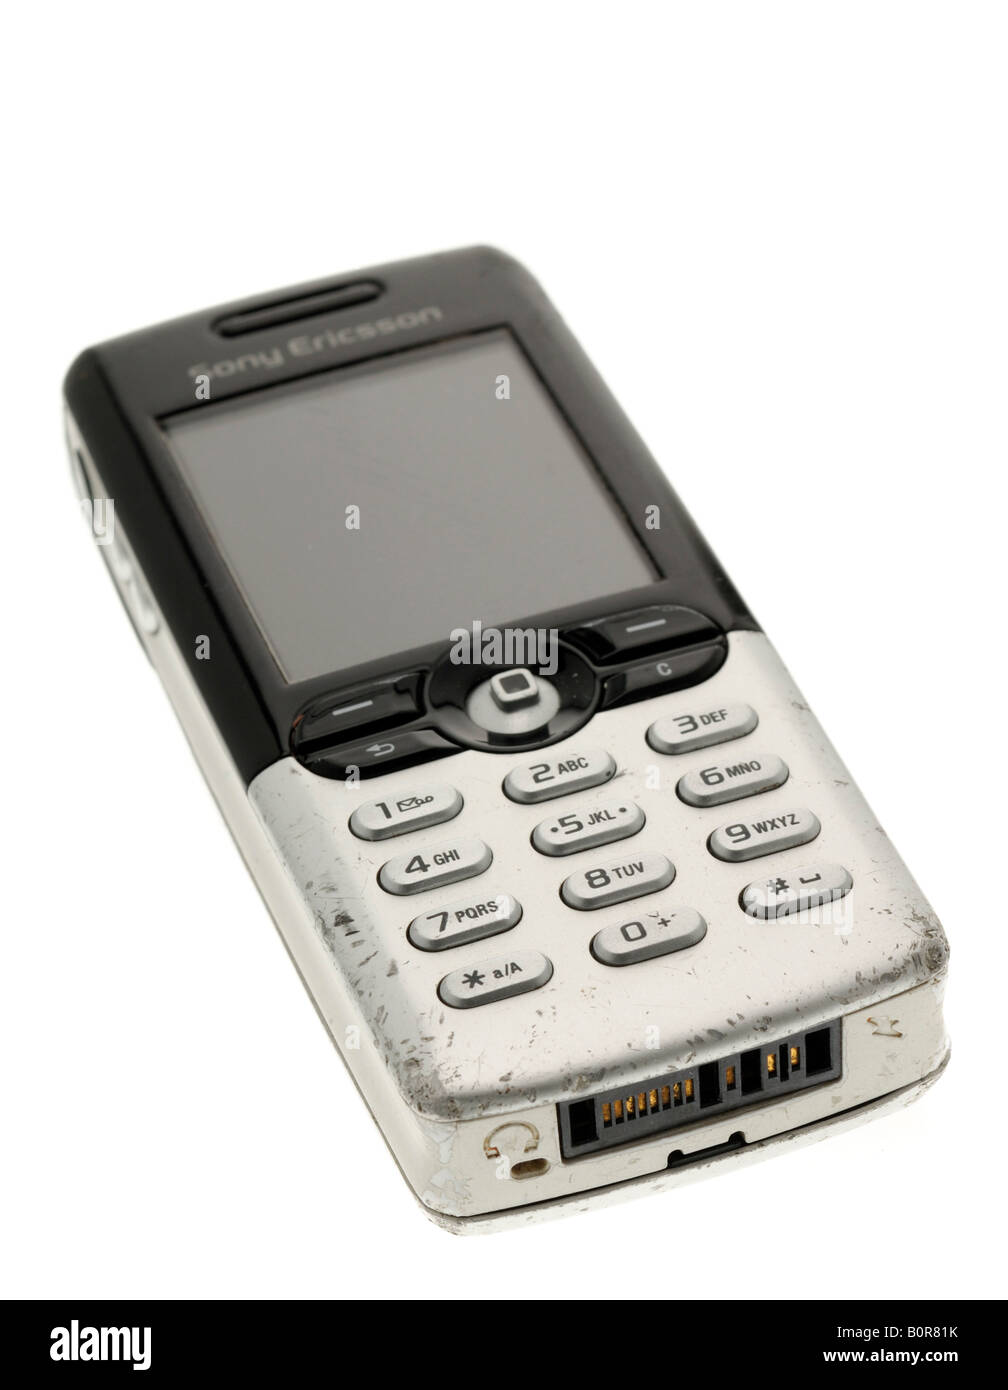 Sony Ericsson telefono mobile Foto stock - Alamy